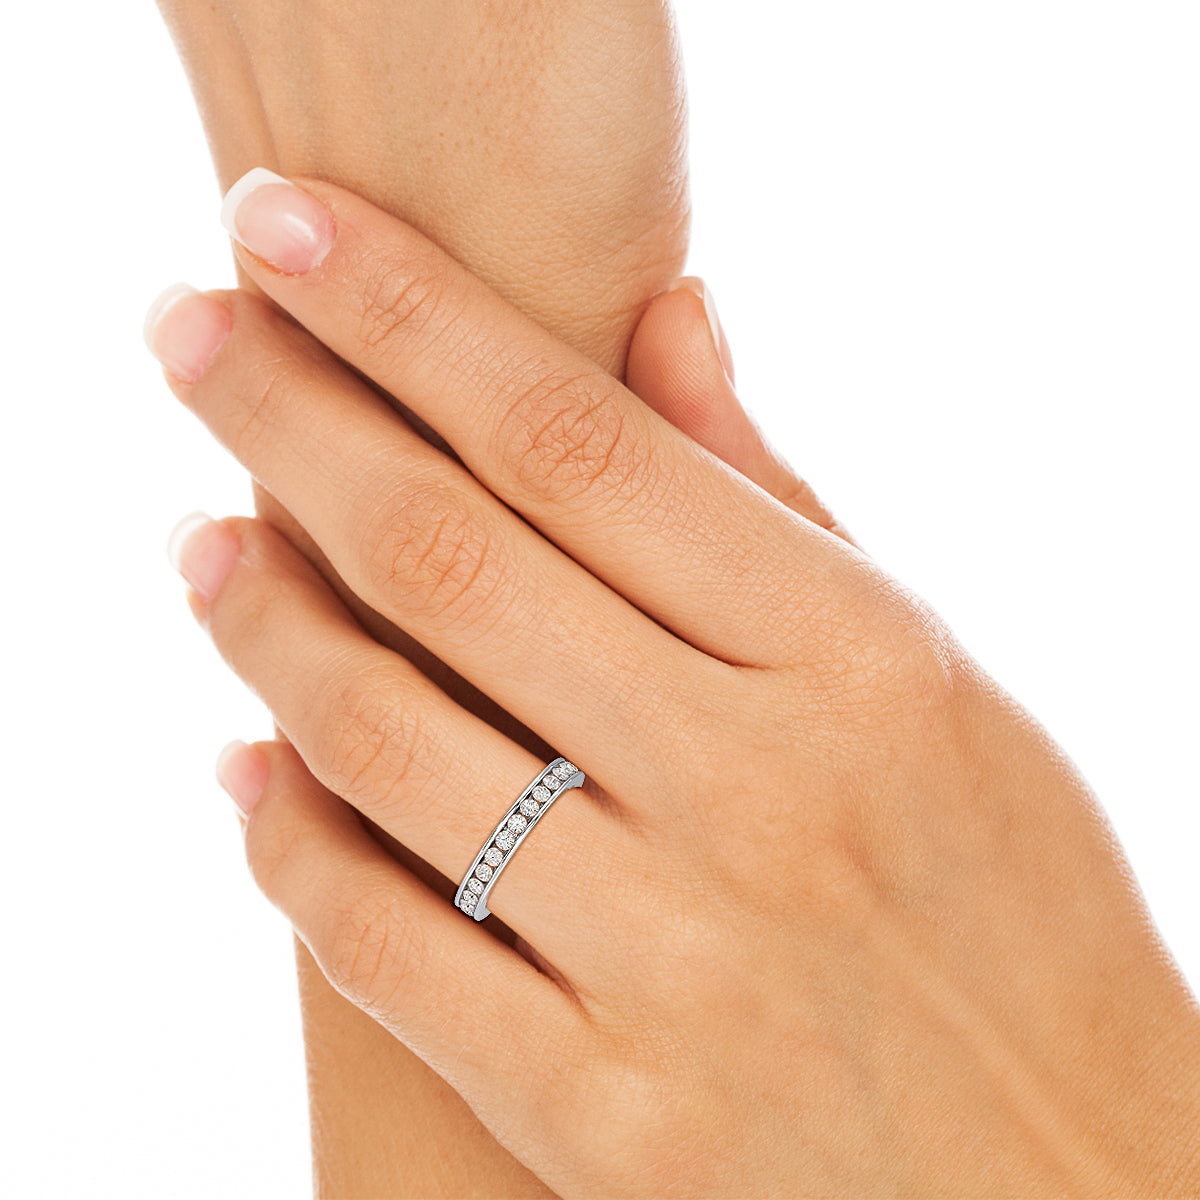 Simple Wedding Band 1.26 CT Lab Diamond Ring